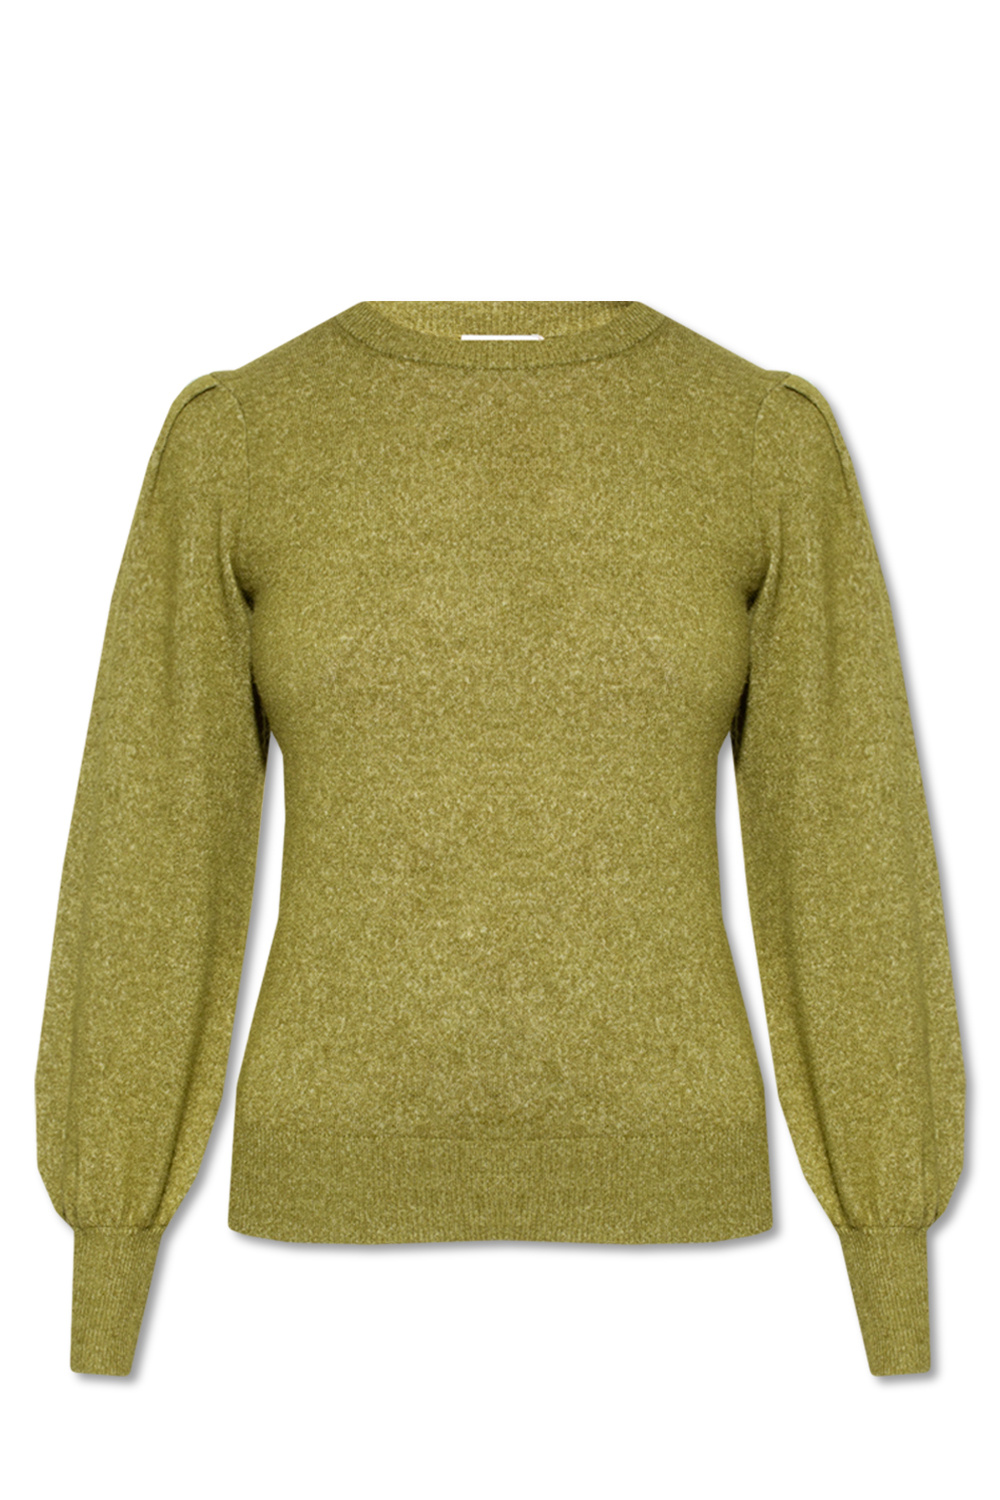 Kate Spade Crewneck sweater